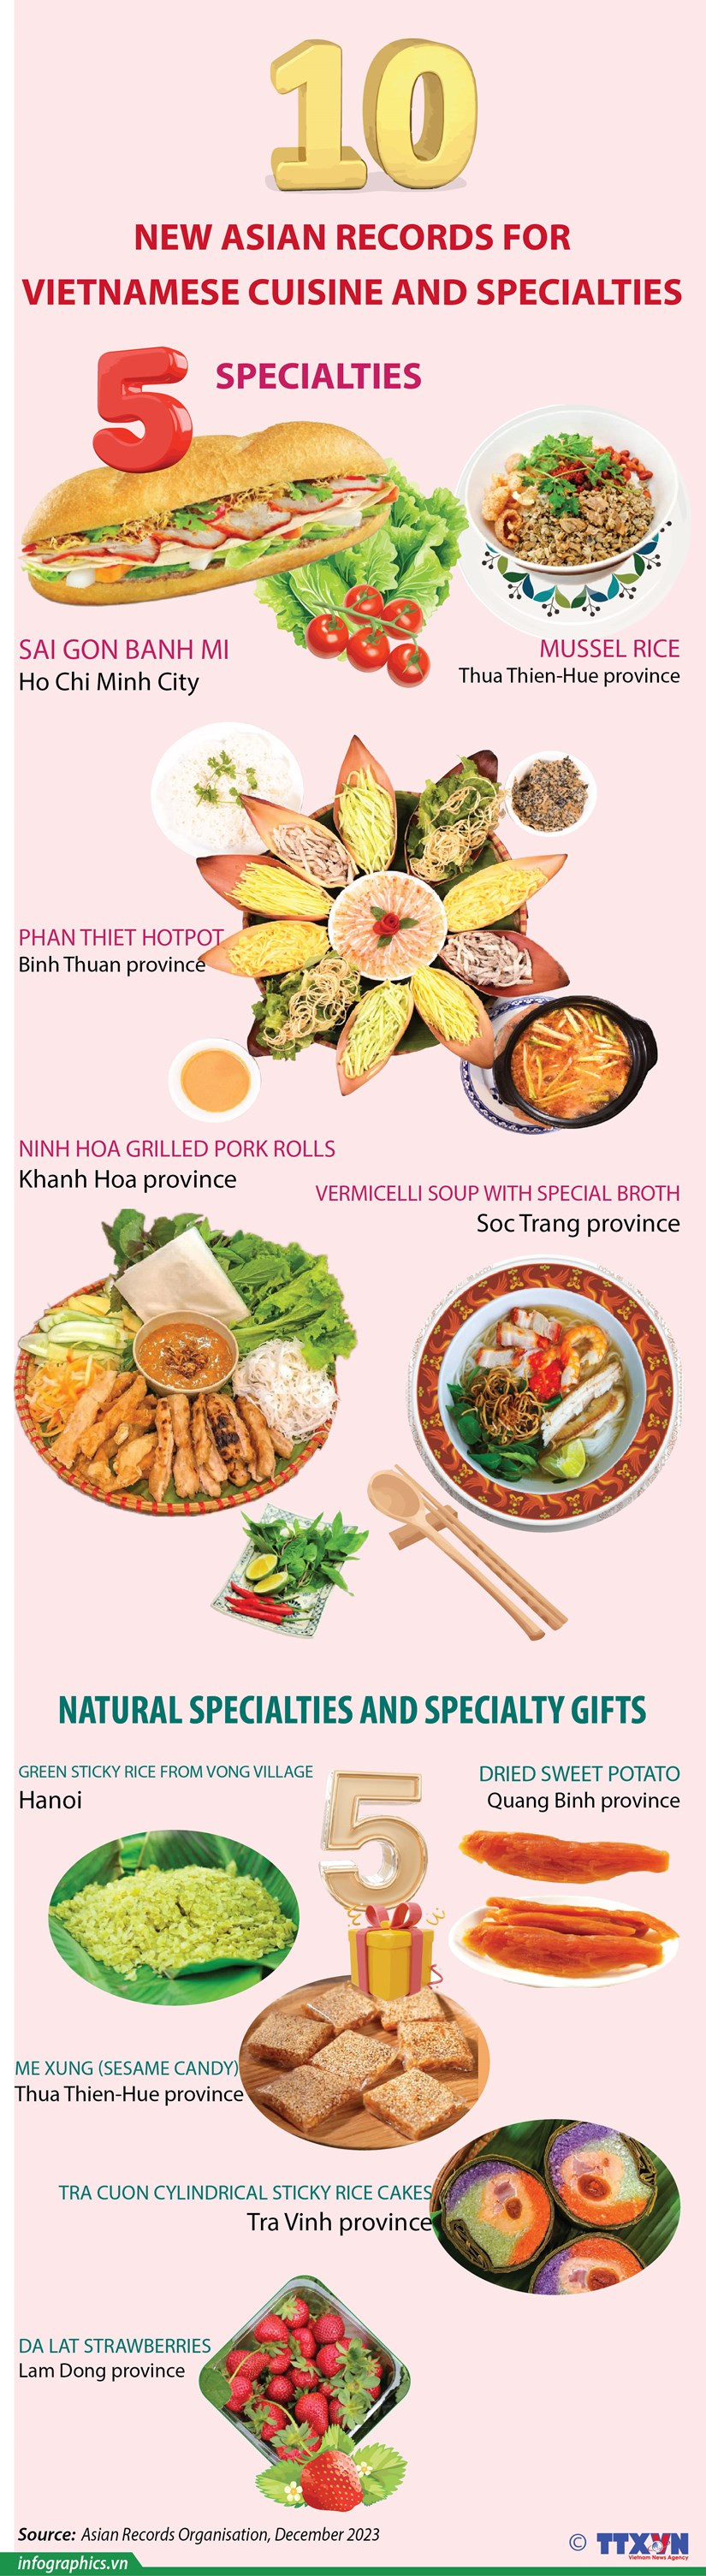 Ten Vietnamese cuisine, specialties set new Asian records hinh anh 1